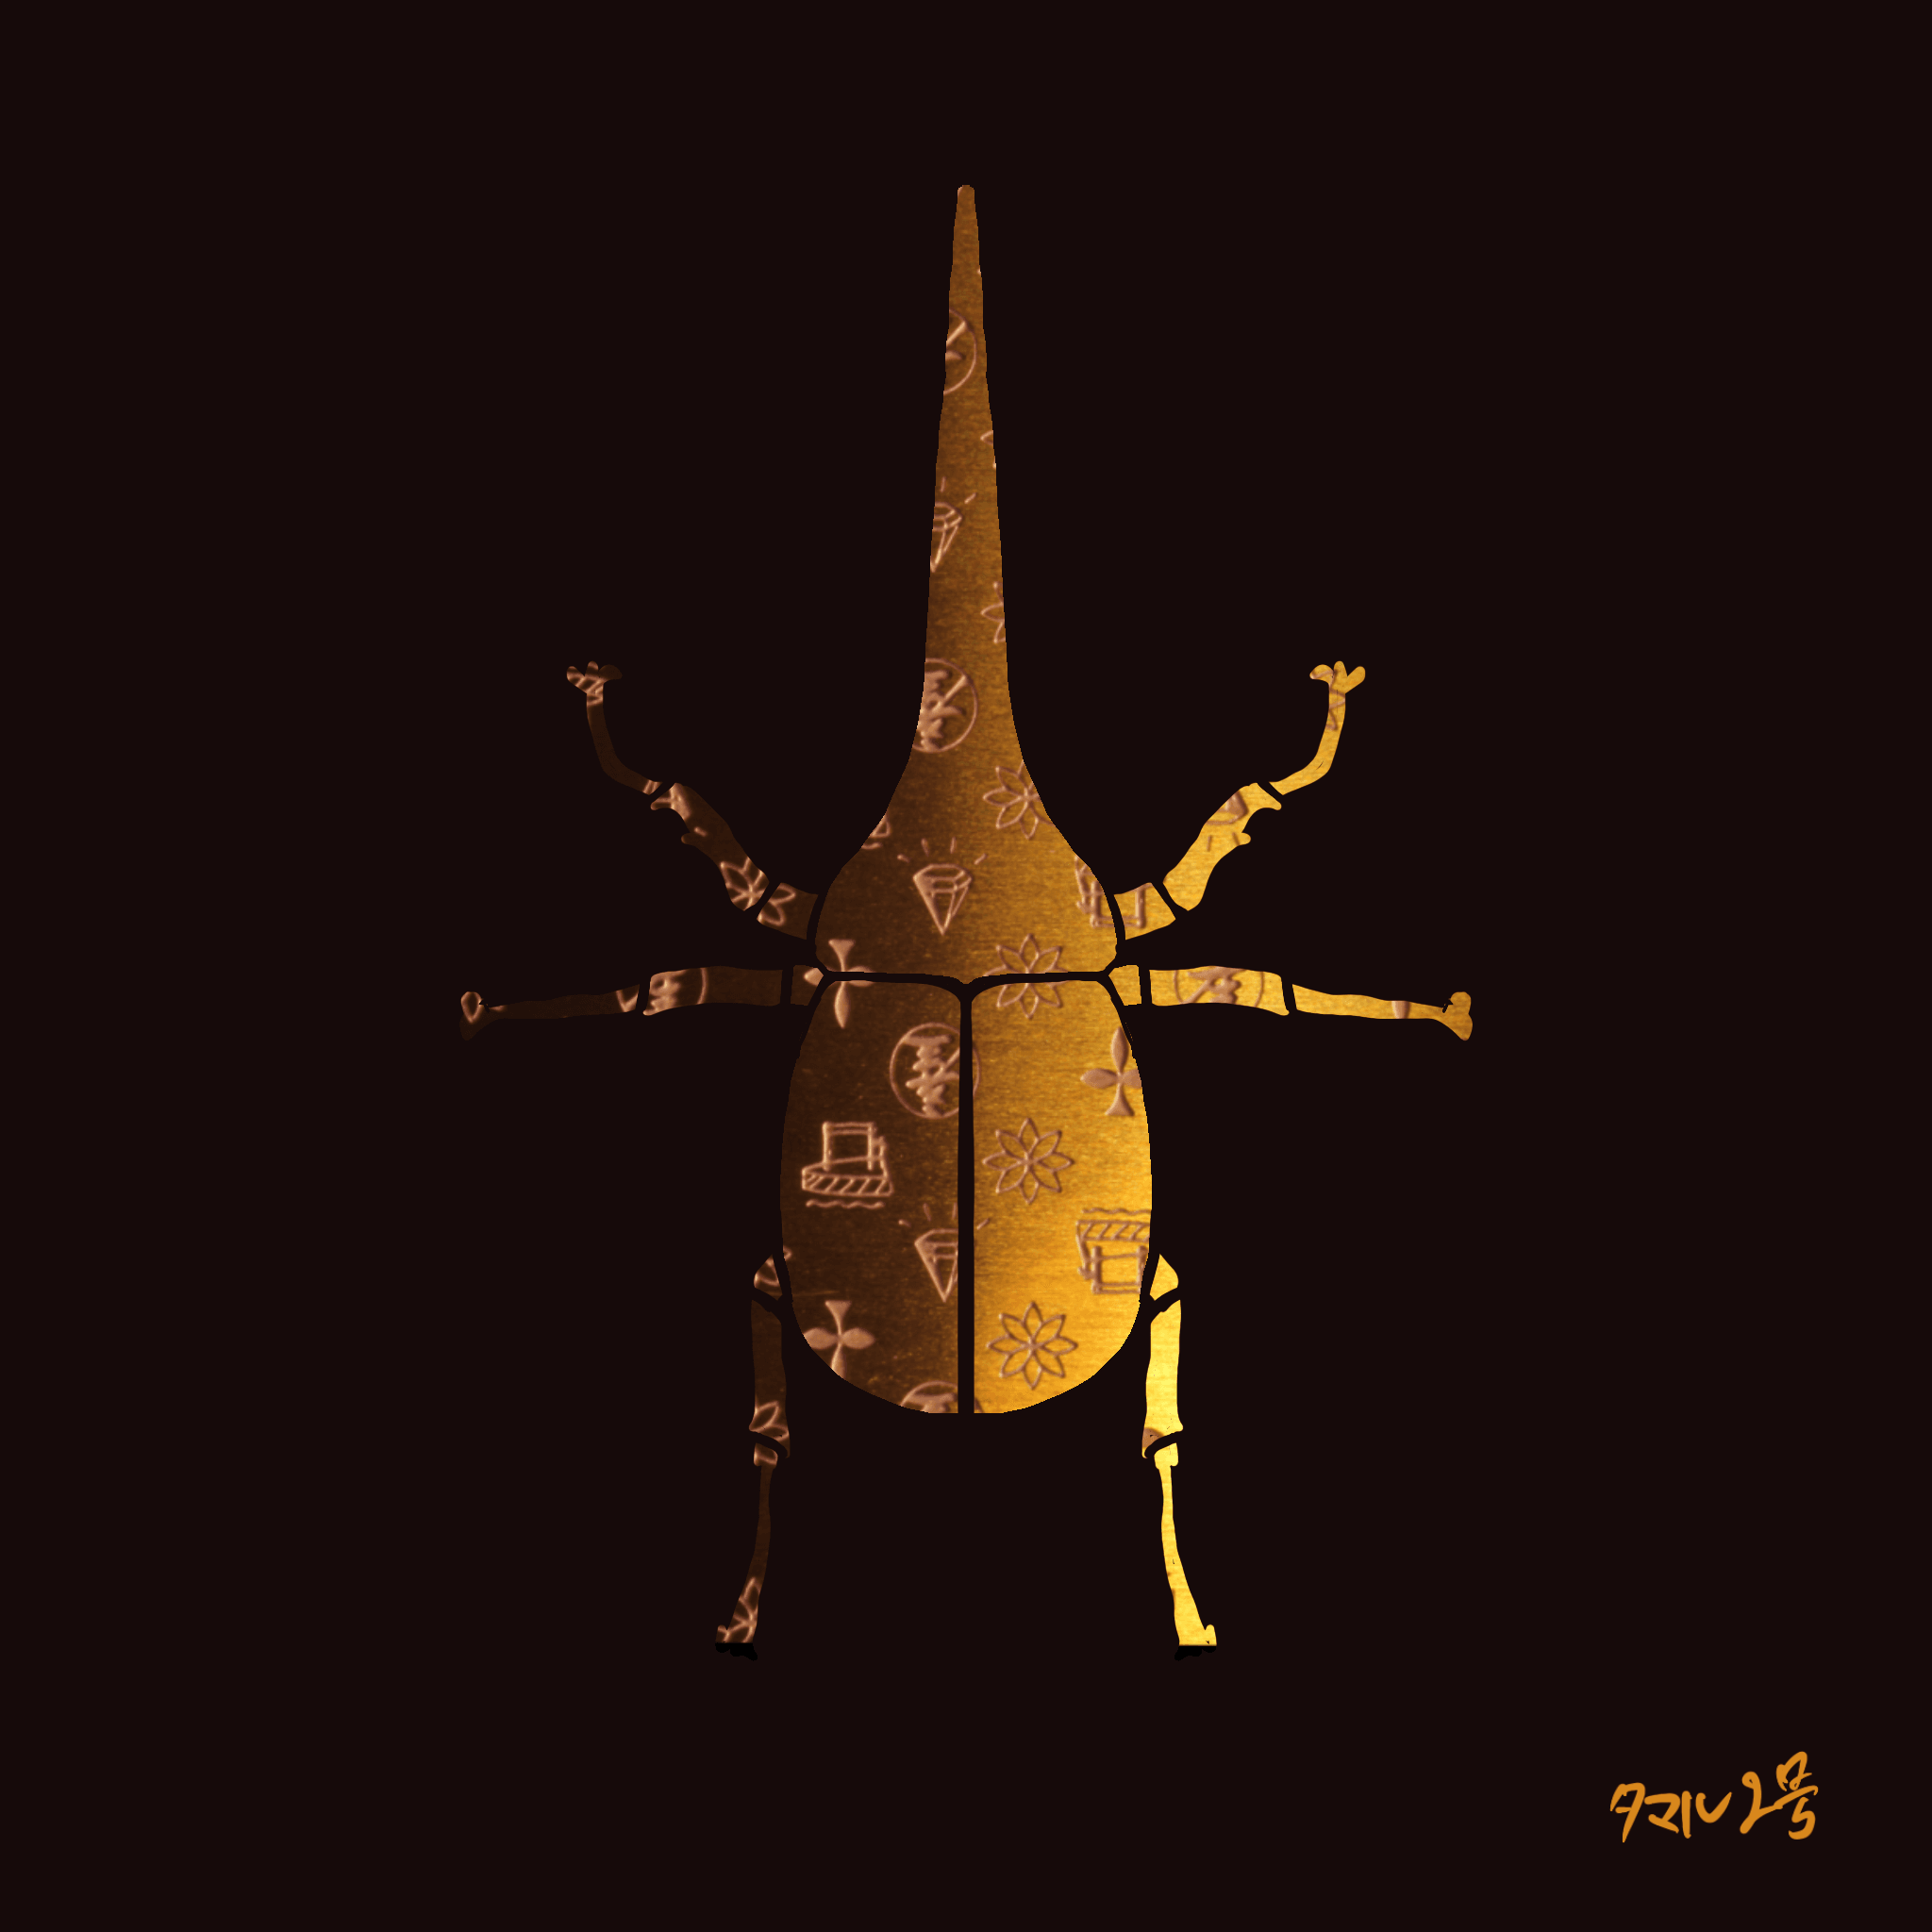 TAMARUSAN Hercules Beetles